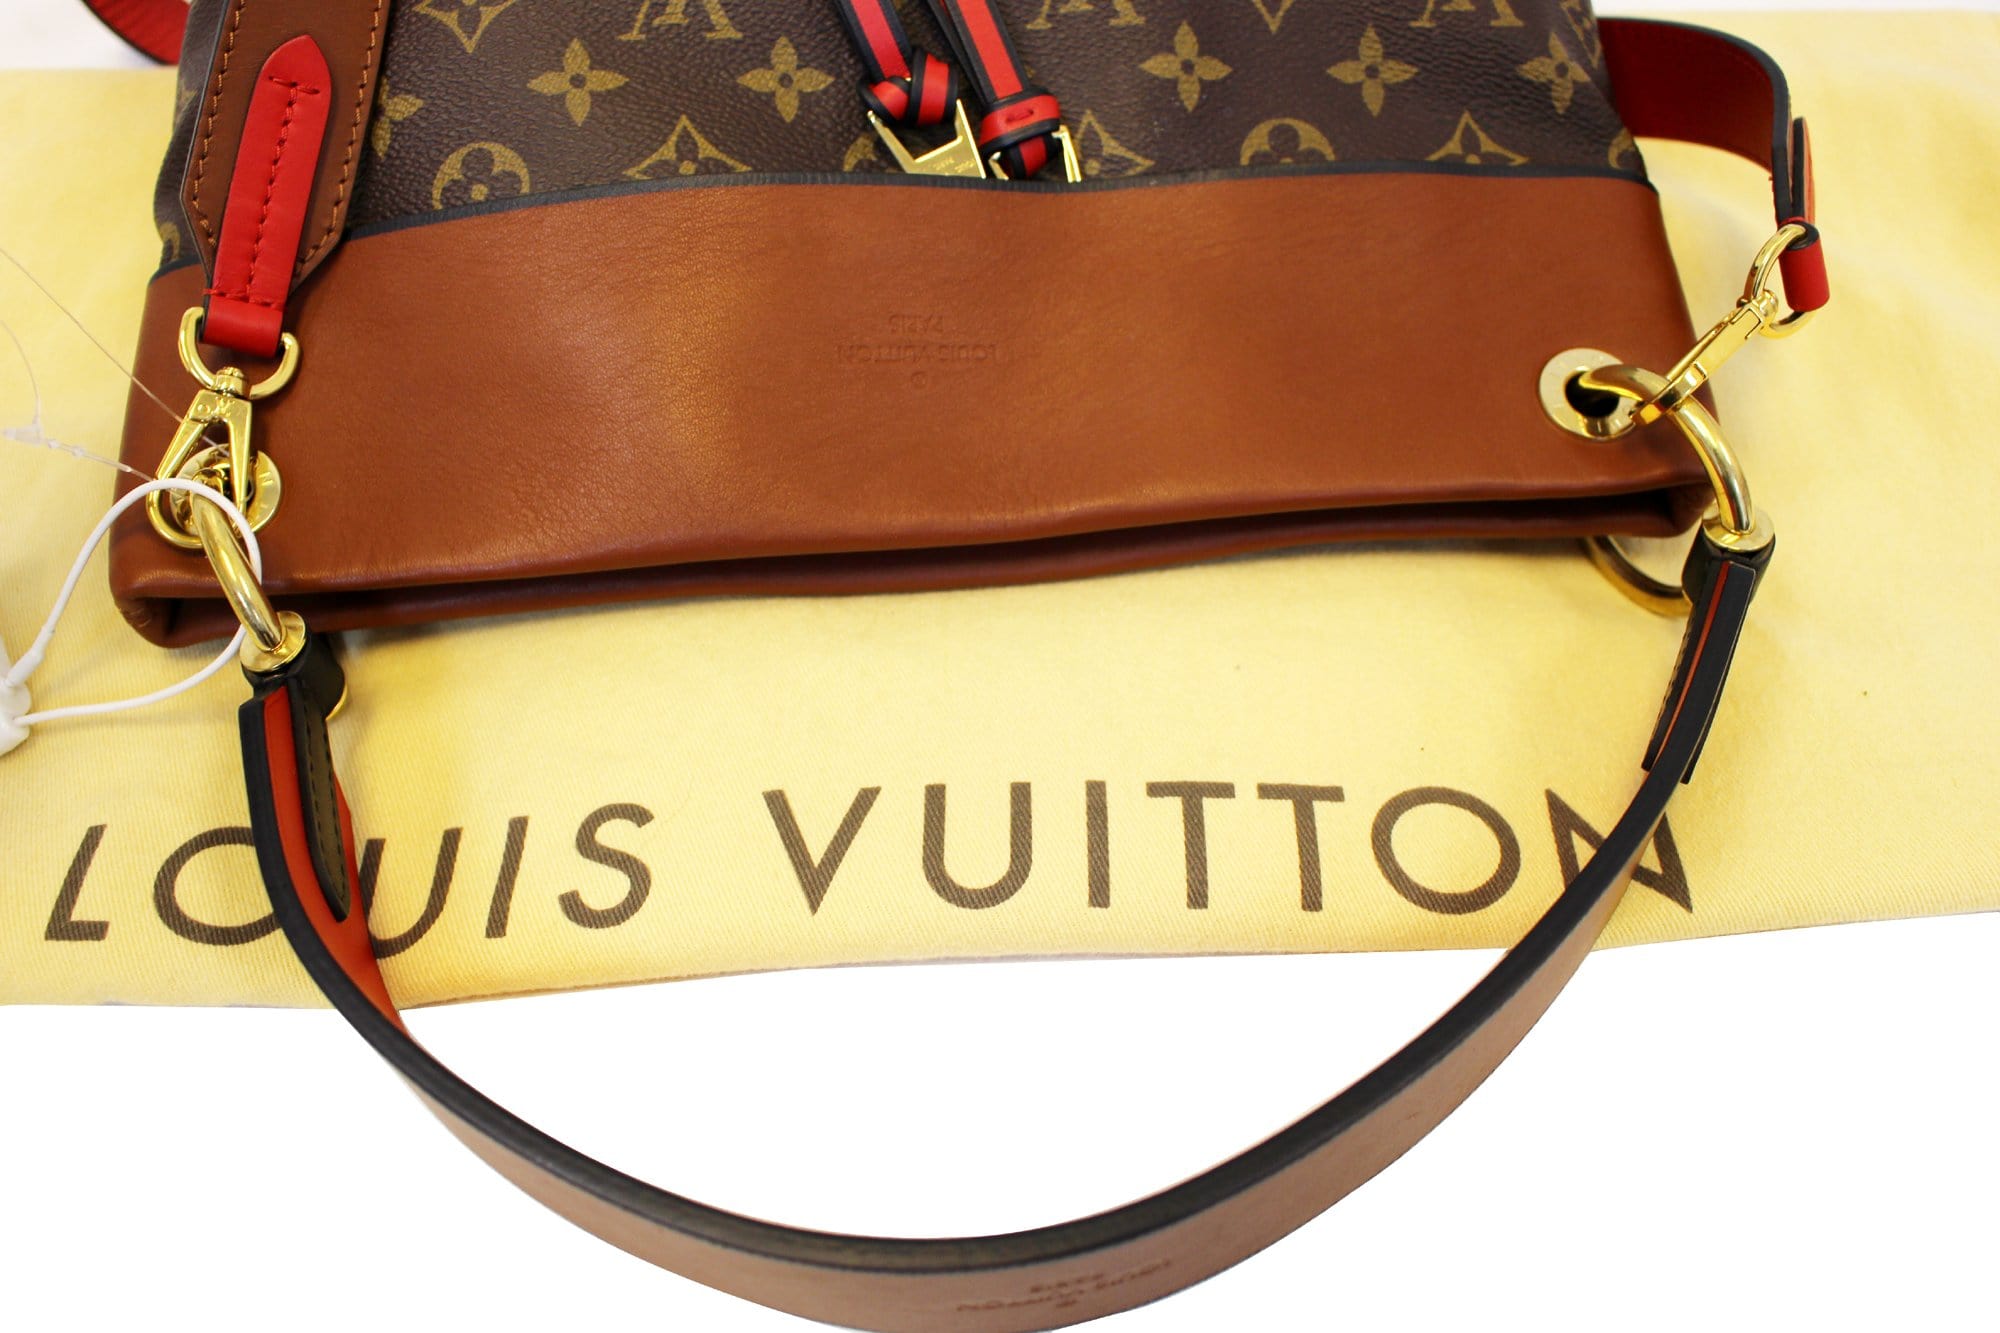 M43157 Louis Vuitton 2017 Monogram Tuileries Besace Handbag-Caramel